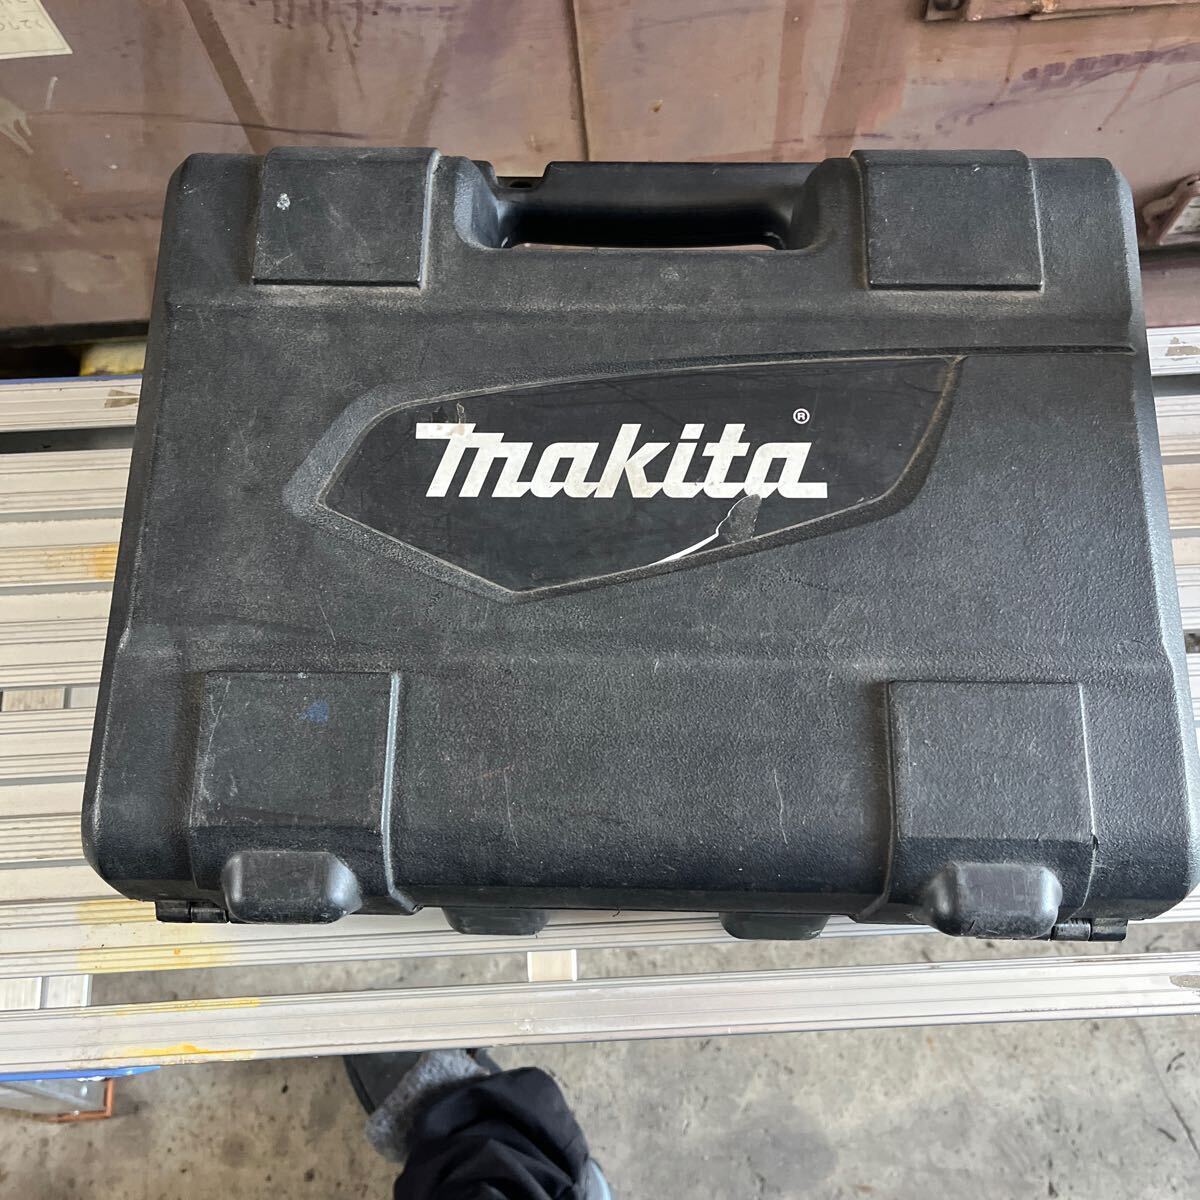  Makita заряжающийся ударный инструмент 